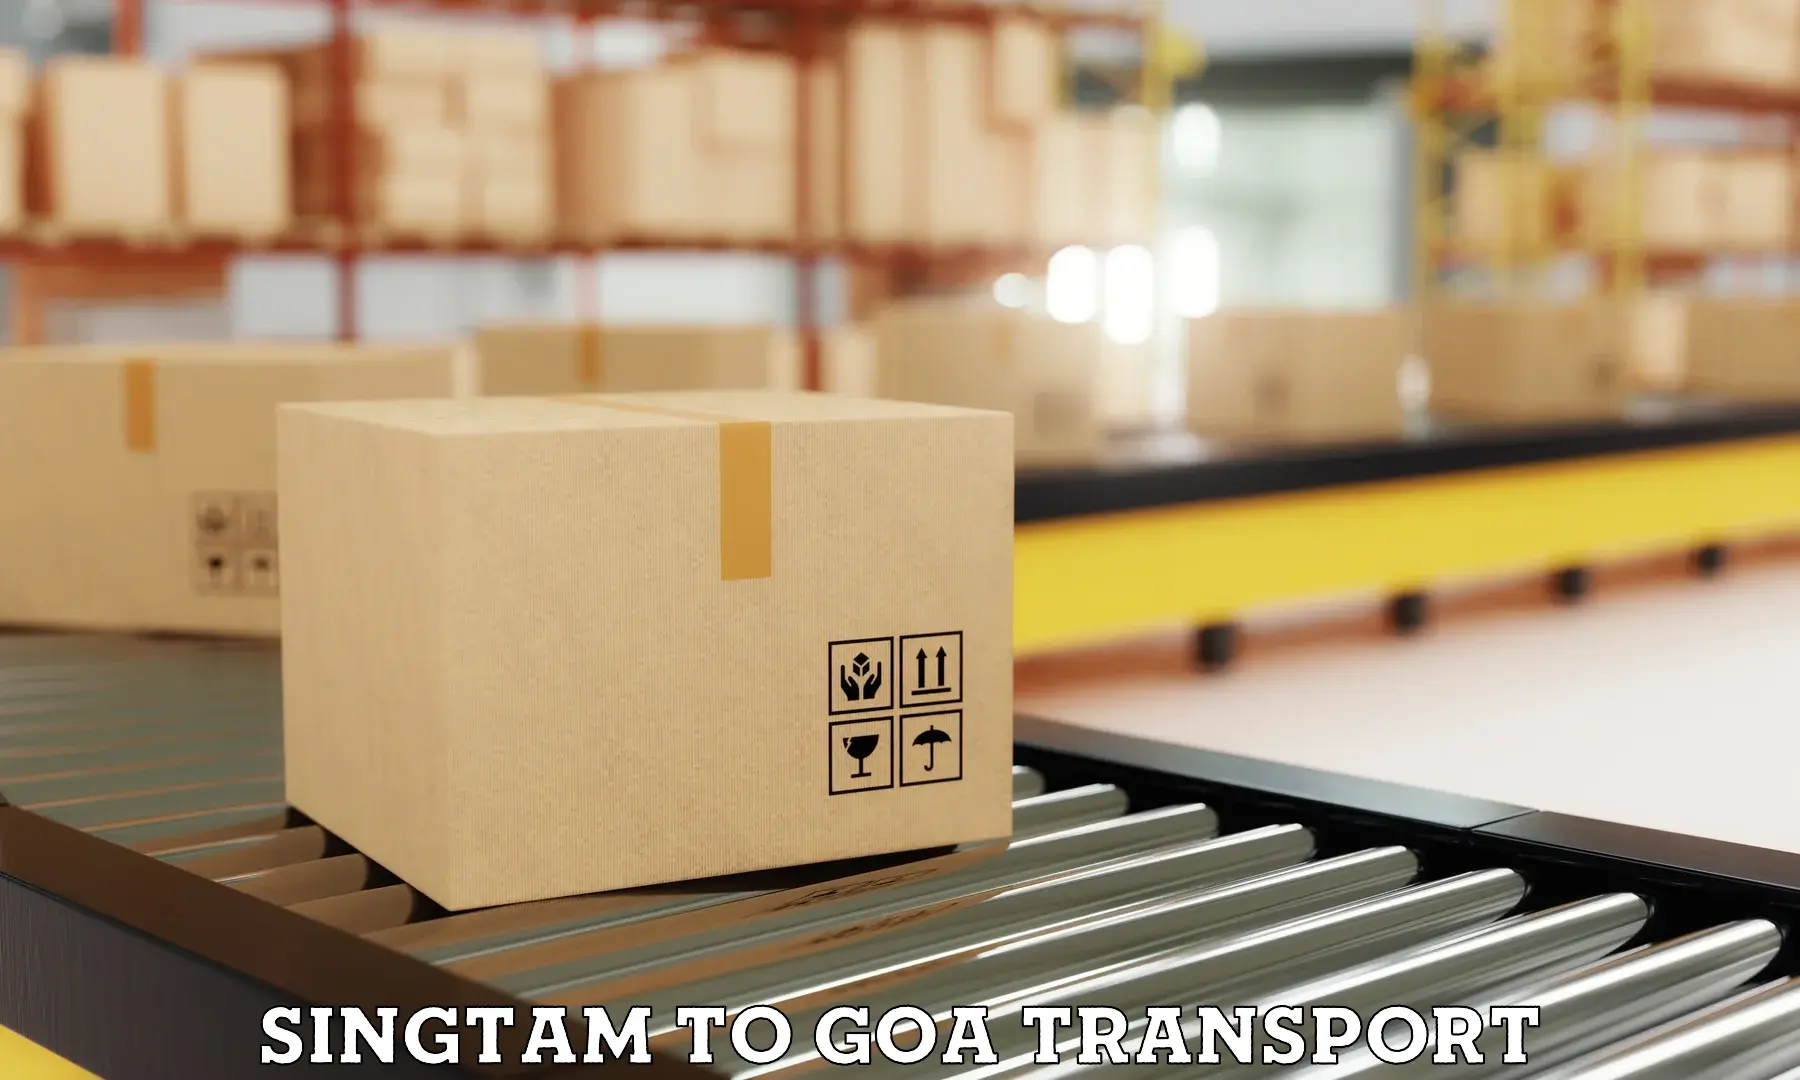 Shipping partner Singtam to Goa